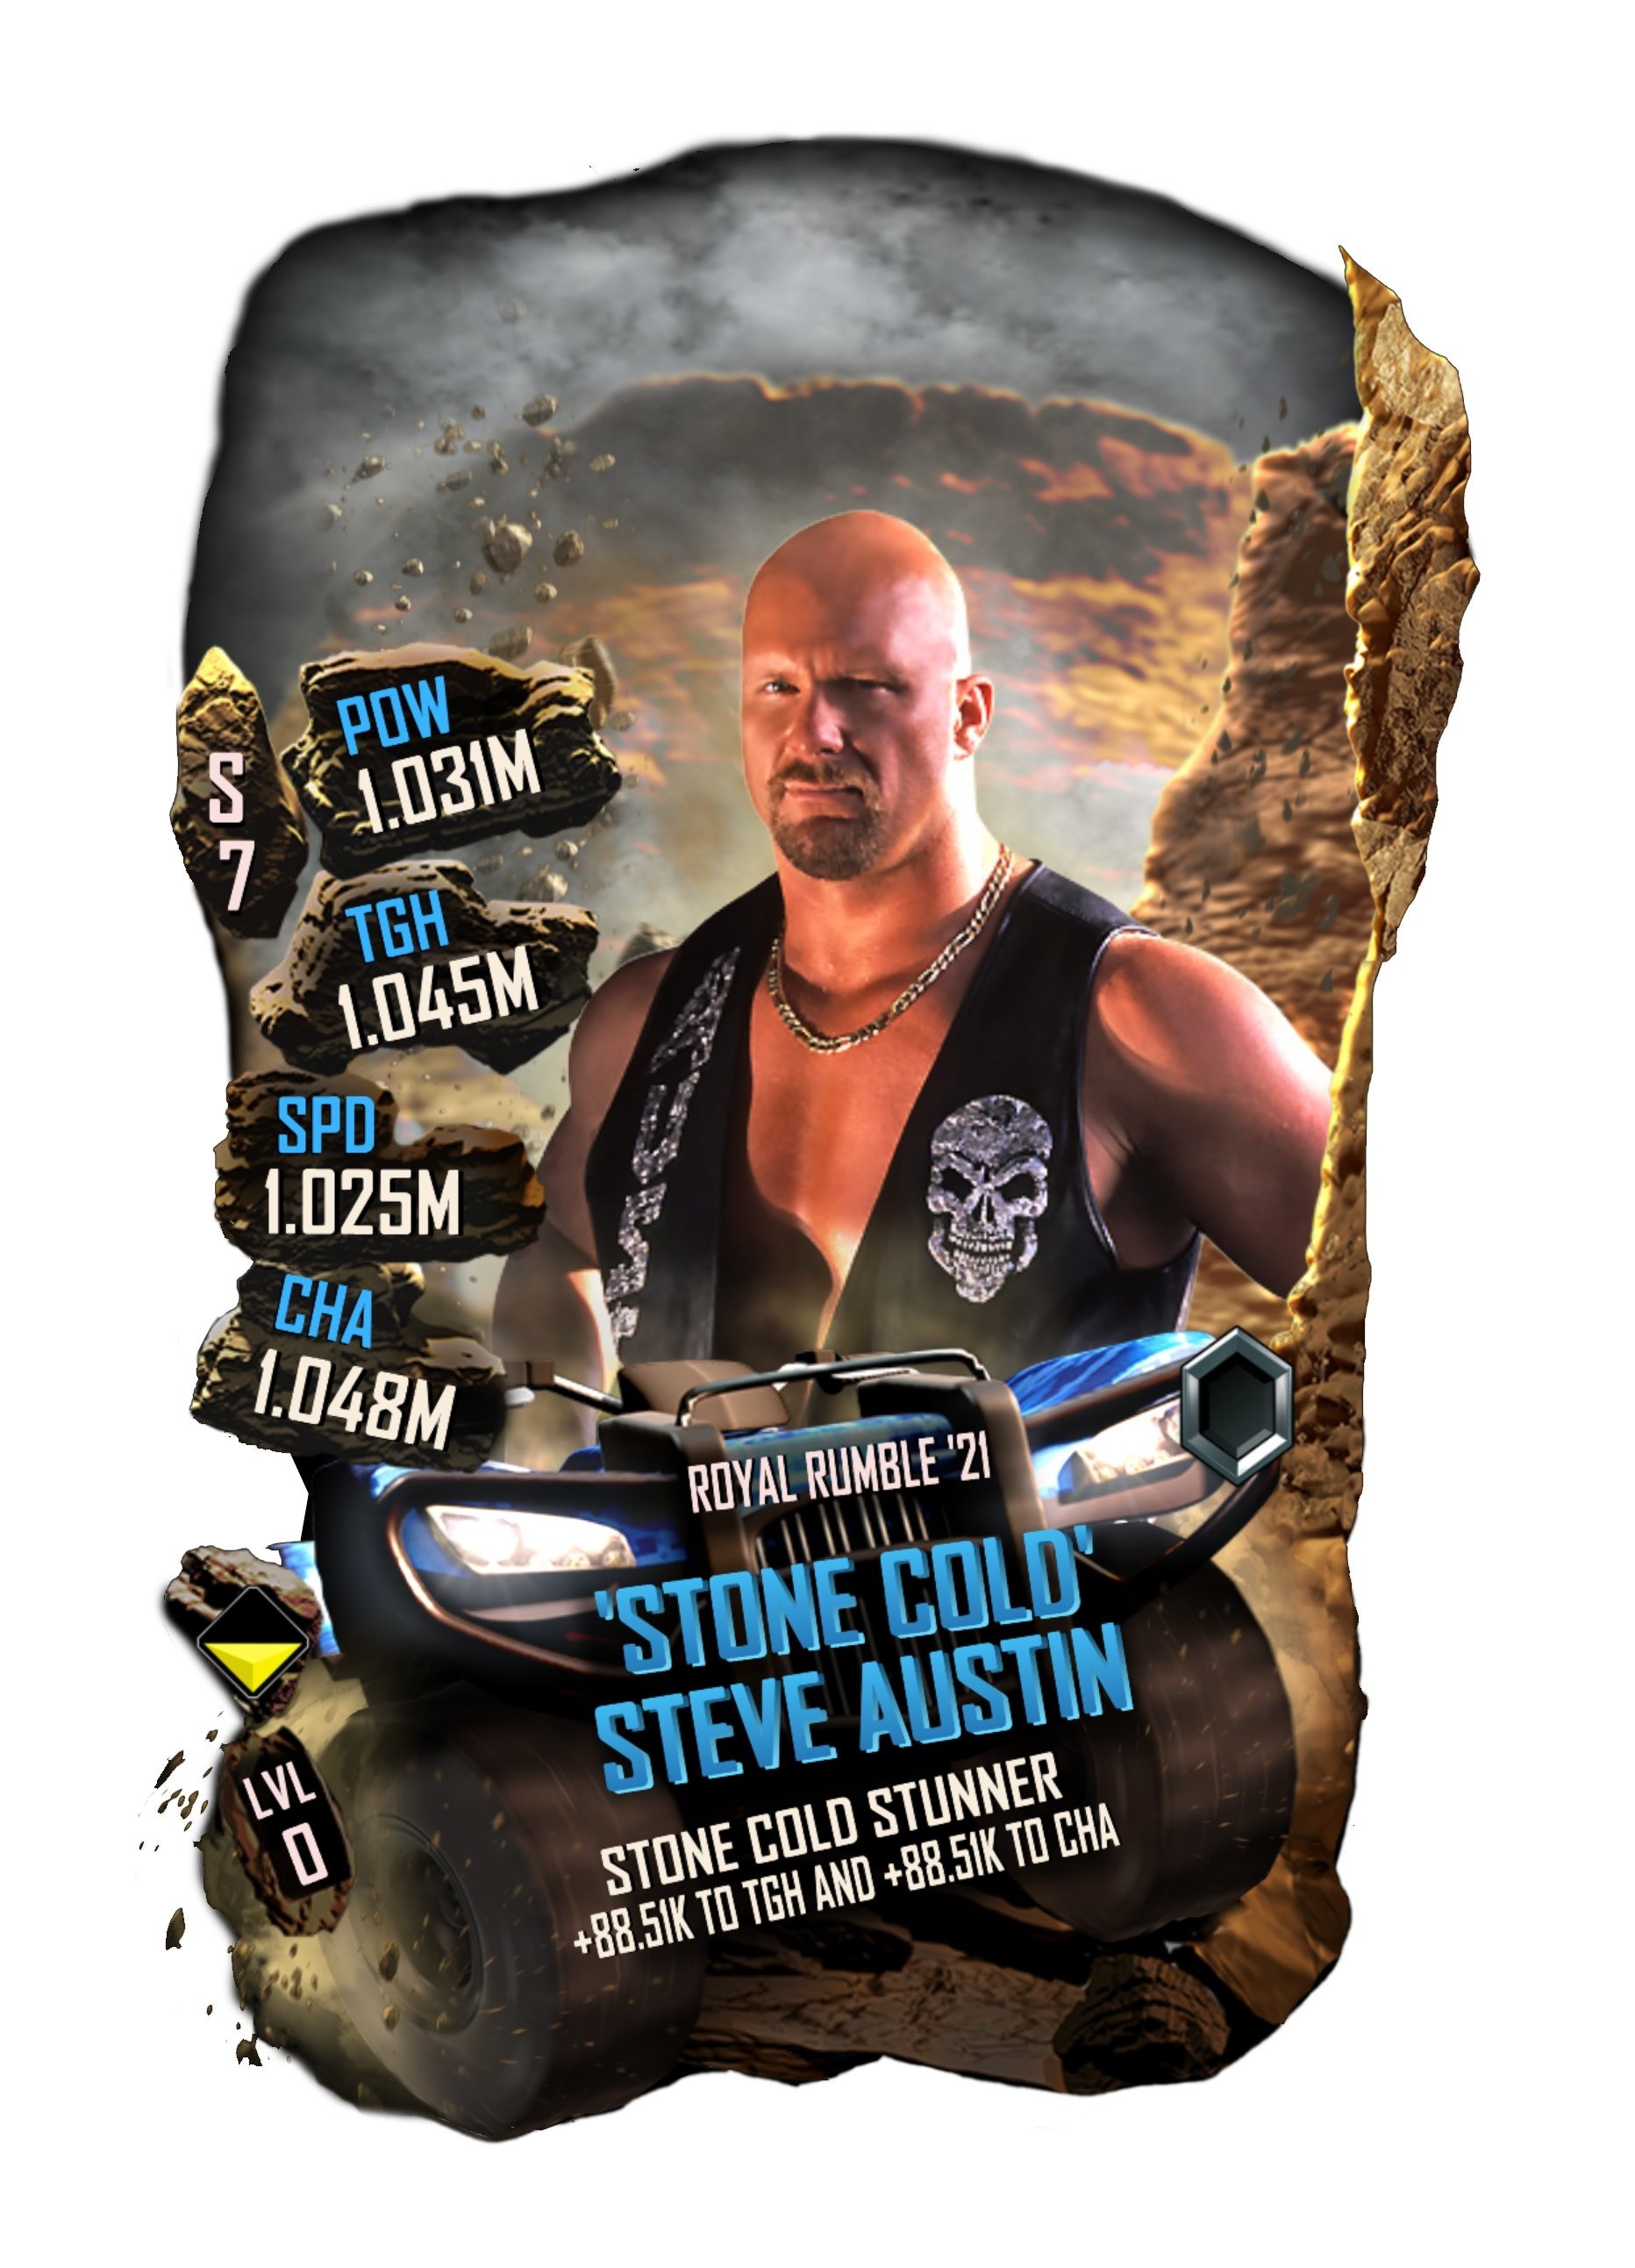 《WWE SuperCard》推出新内容庆祝“Stone Cold”Steve Austin 登场 25 周年